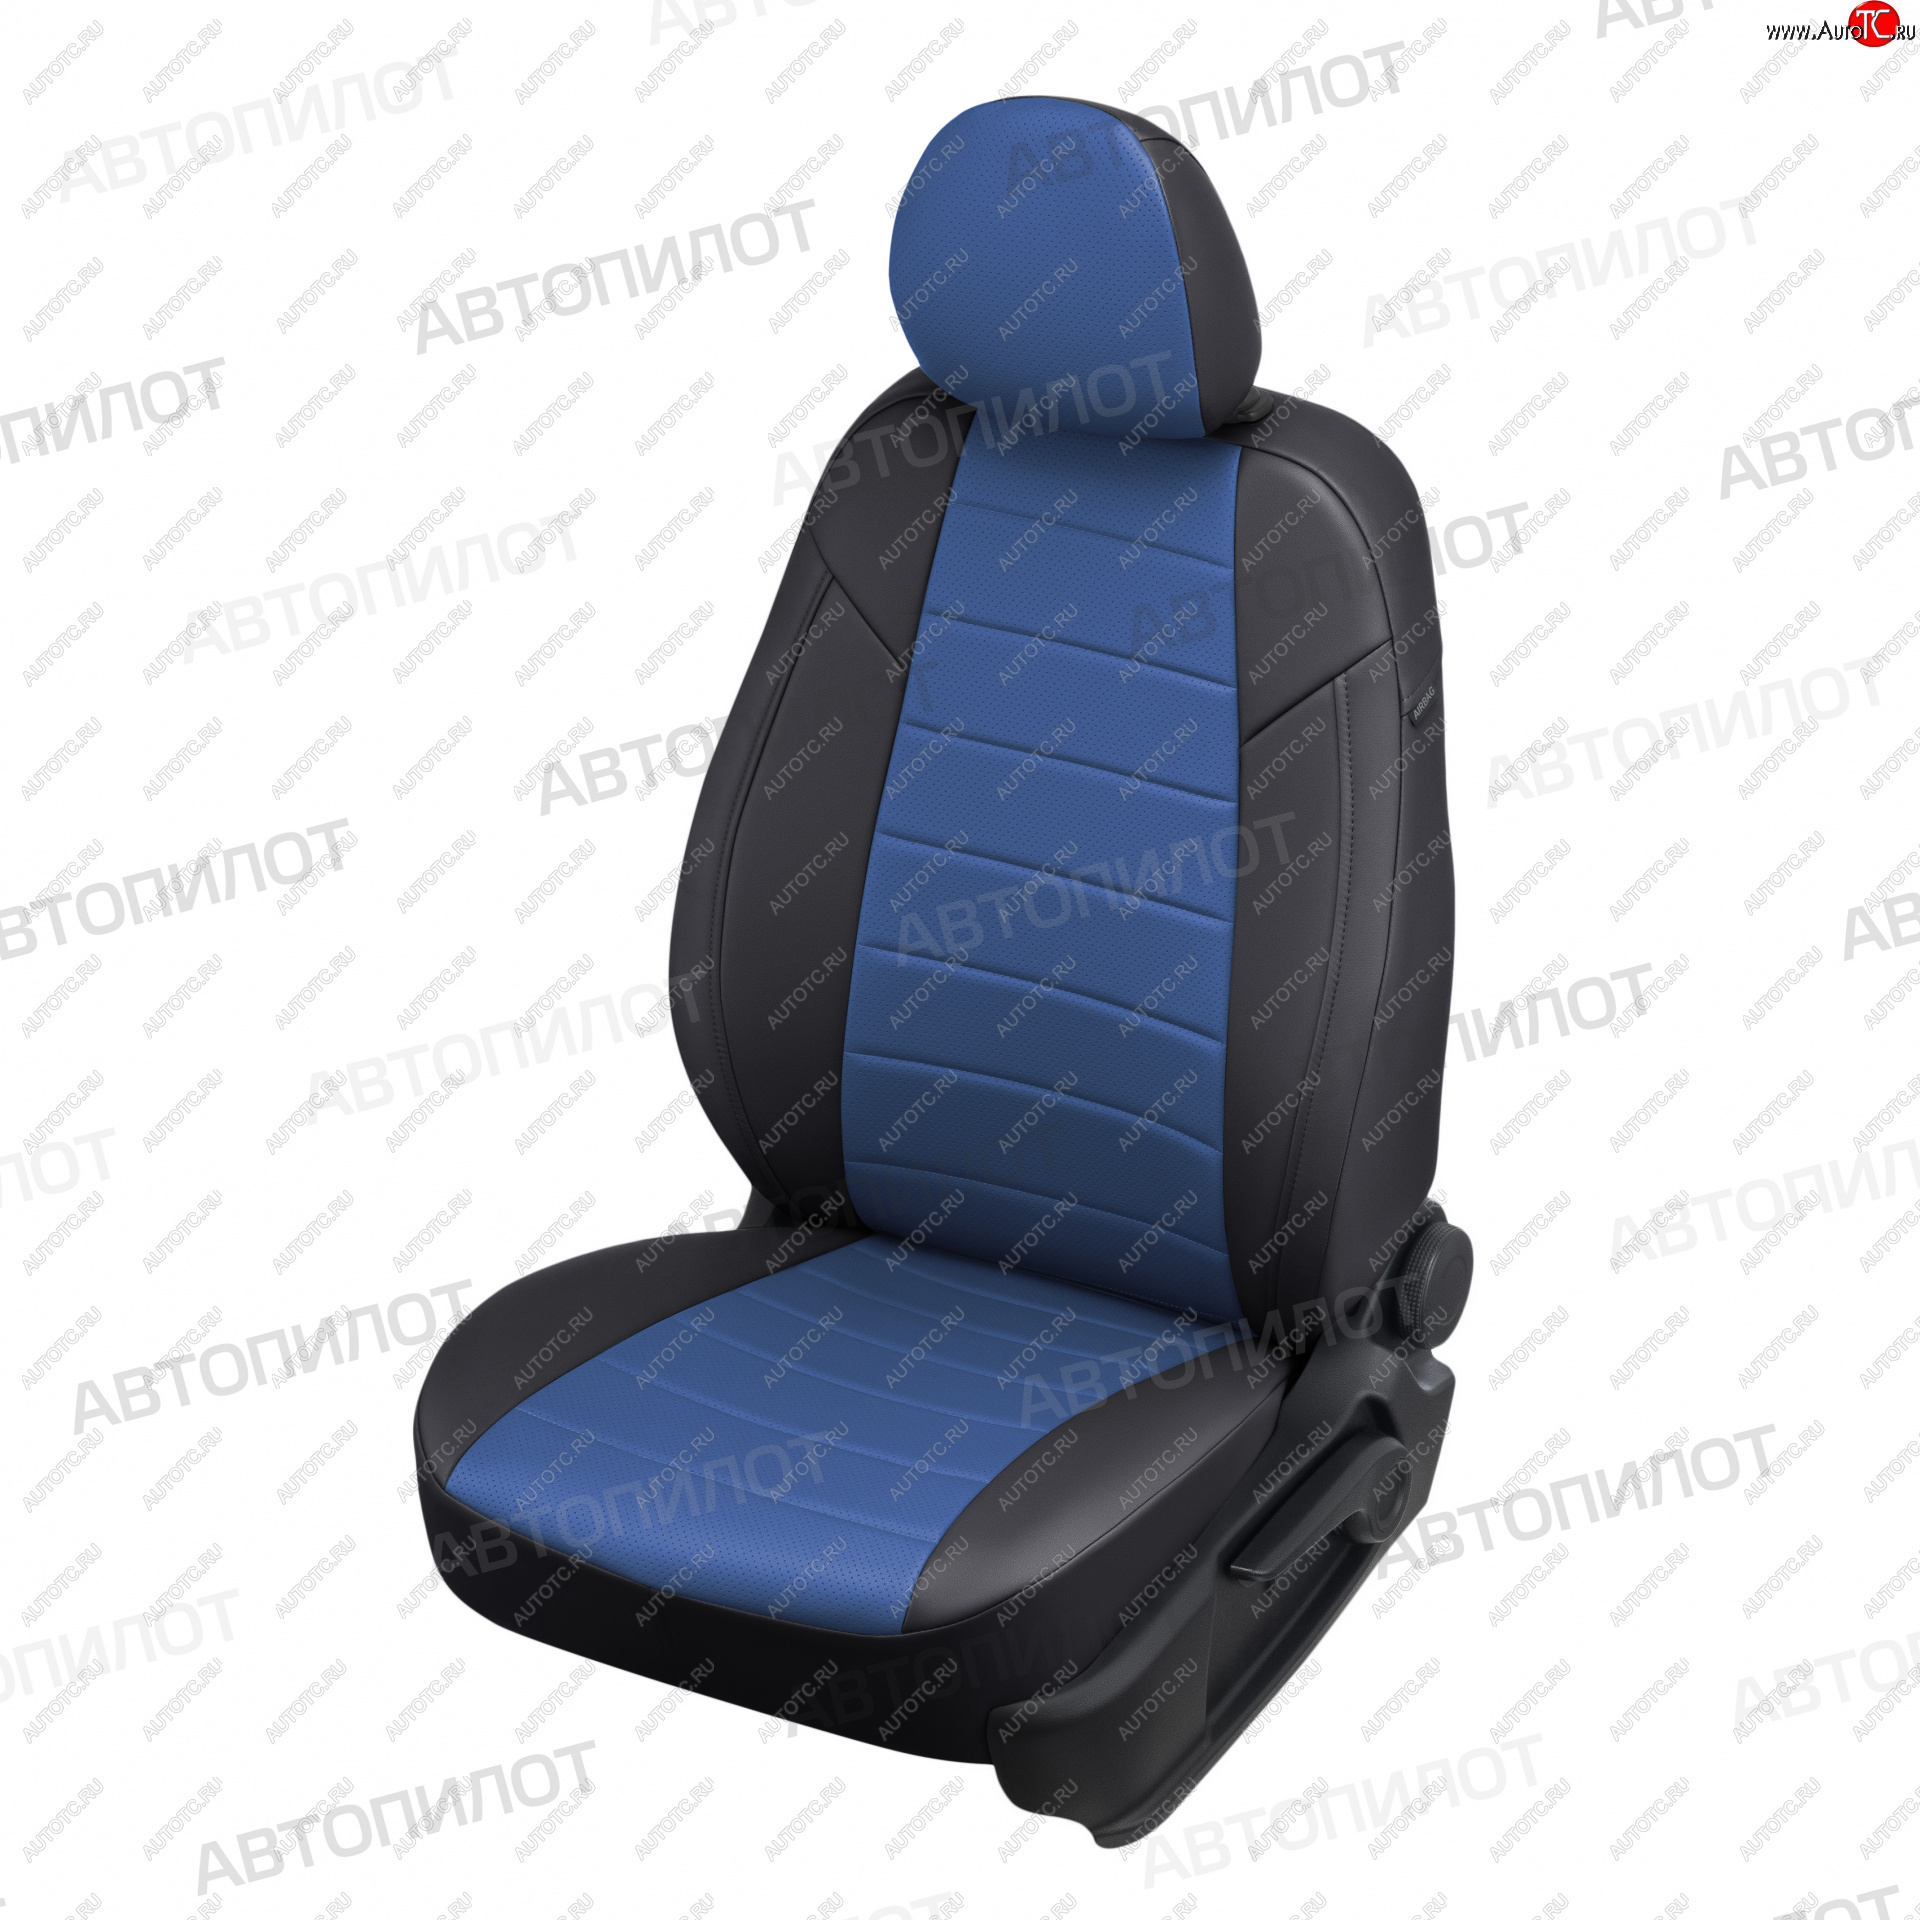 20 999 р. Чехлы сидений (экокожа, 8 мест) Автопилот  KIA Carnival  KA4 (2020-2024) (черный/синий)